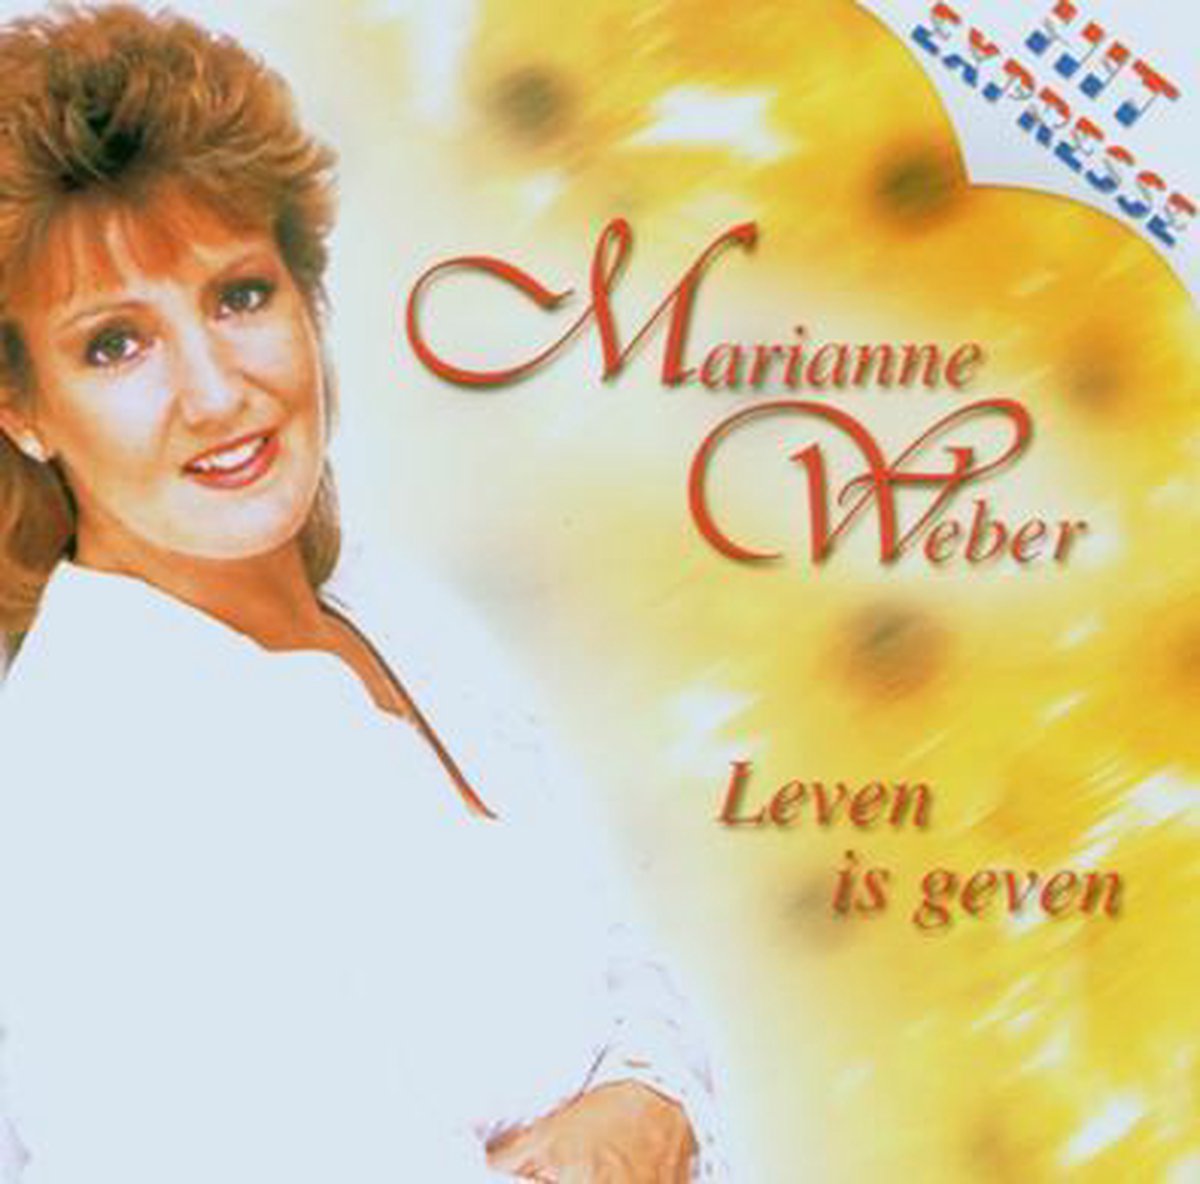 Marianne Weber Leven is geven